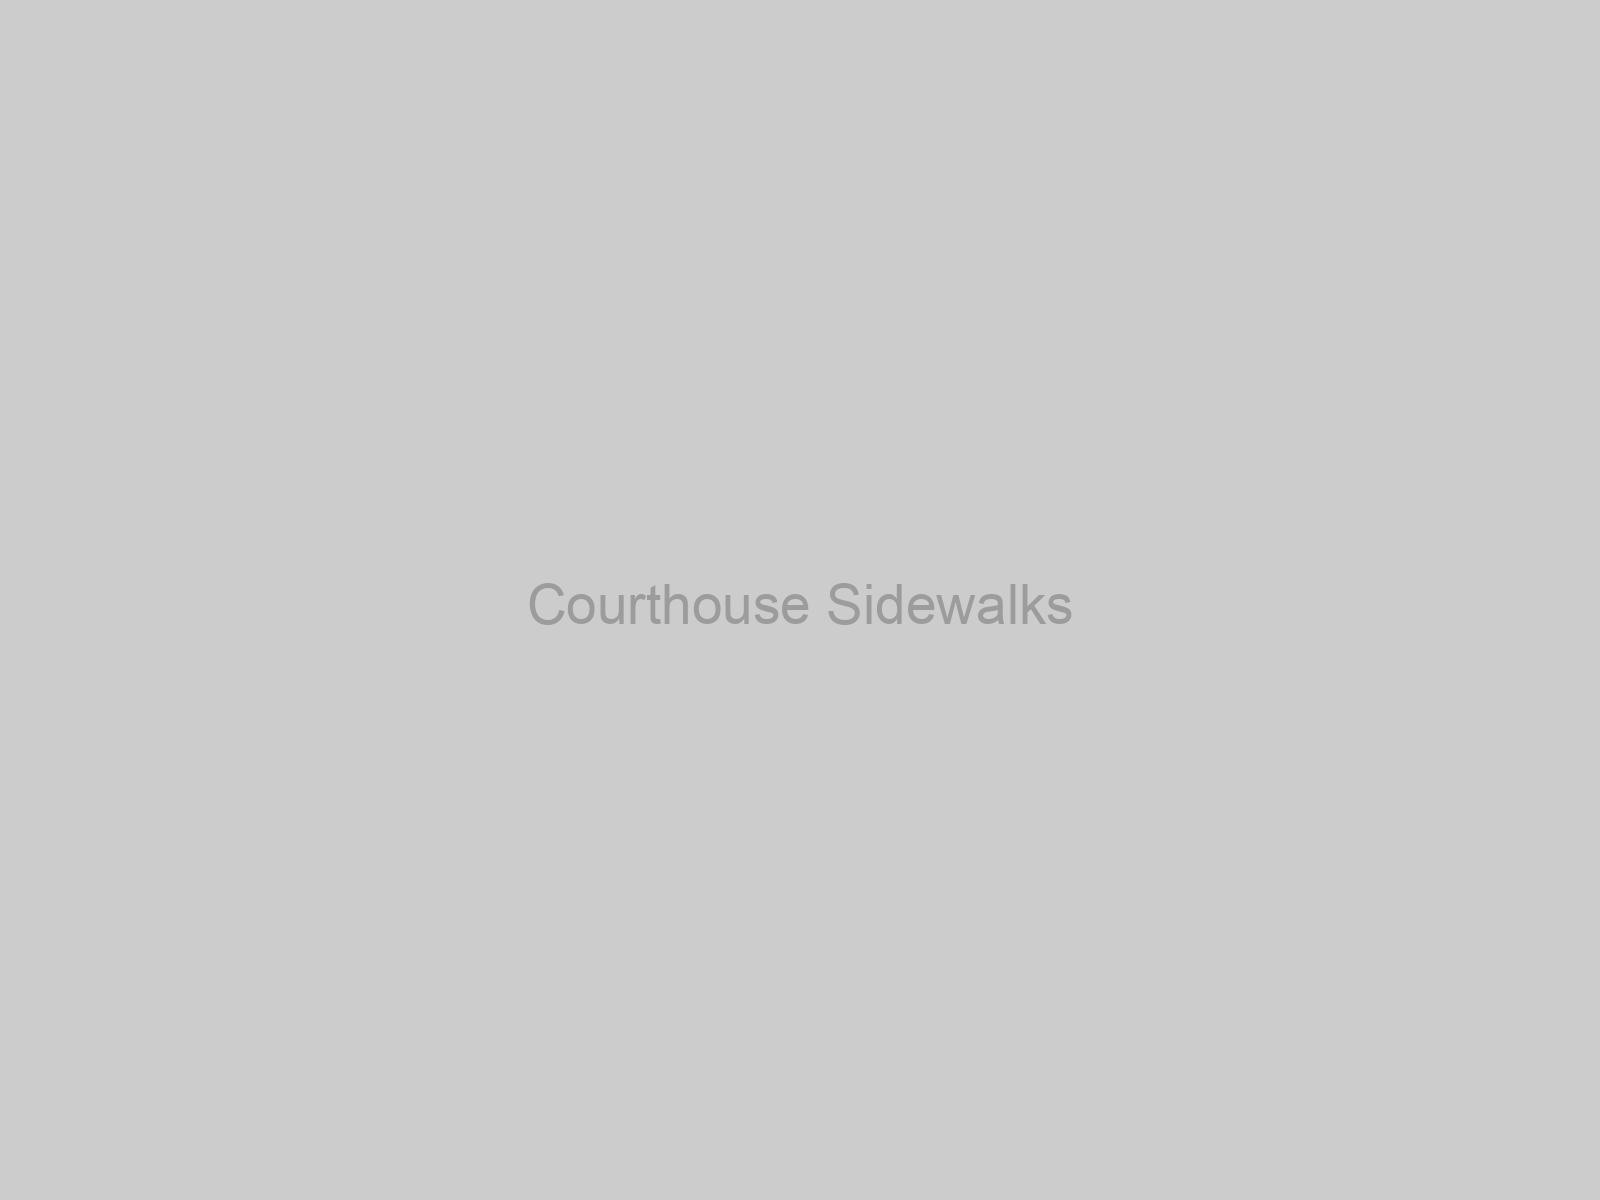 Courthouse Sidewalks